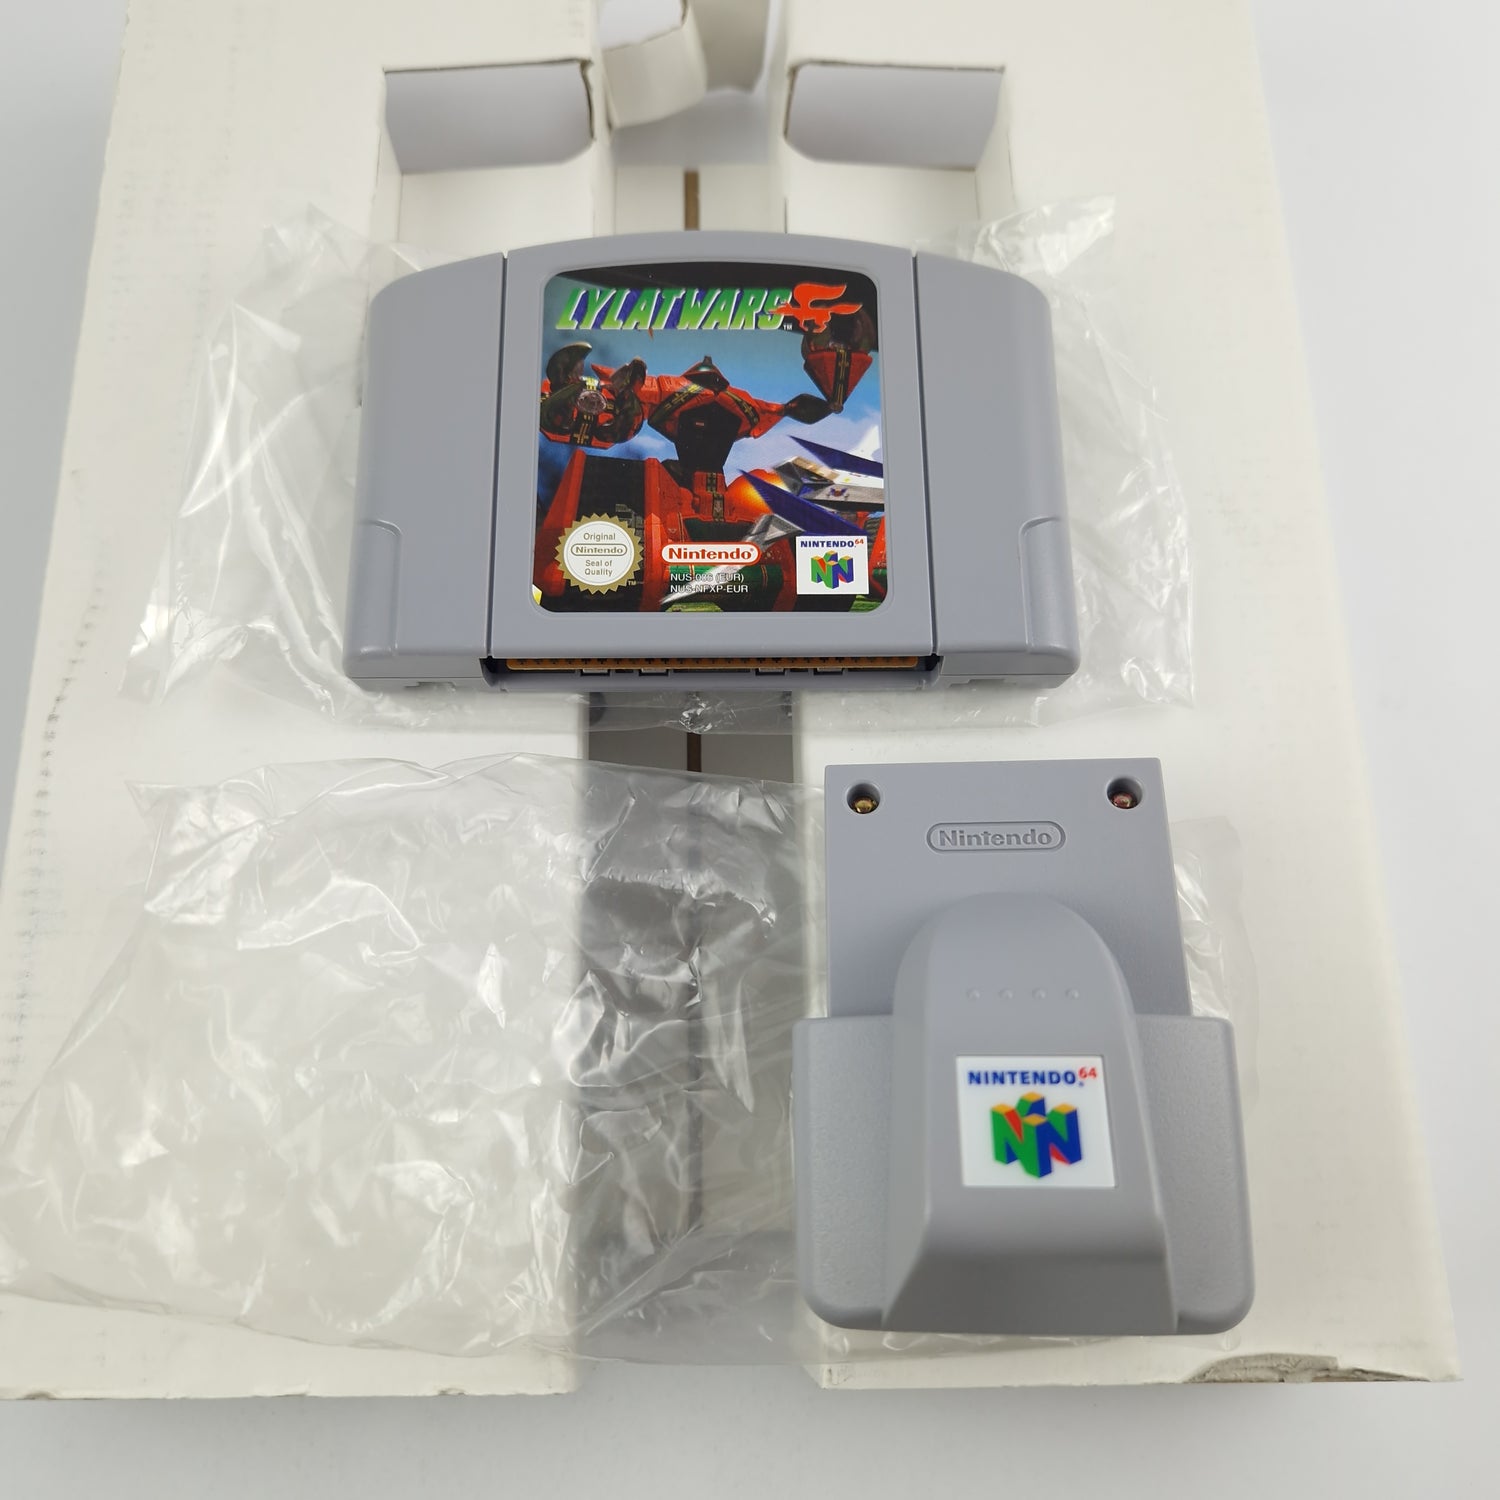 Nintendo 64 Spiel : Lylatwars - Modul Rumble Pak Anleitung BIG BOX OVP / N64 PAL